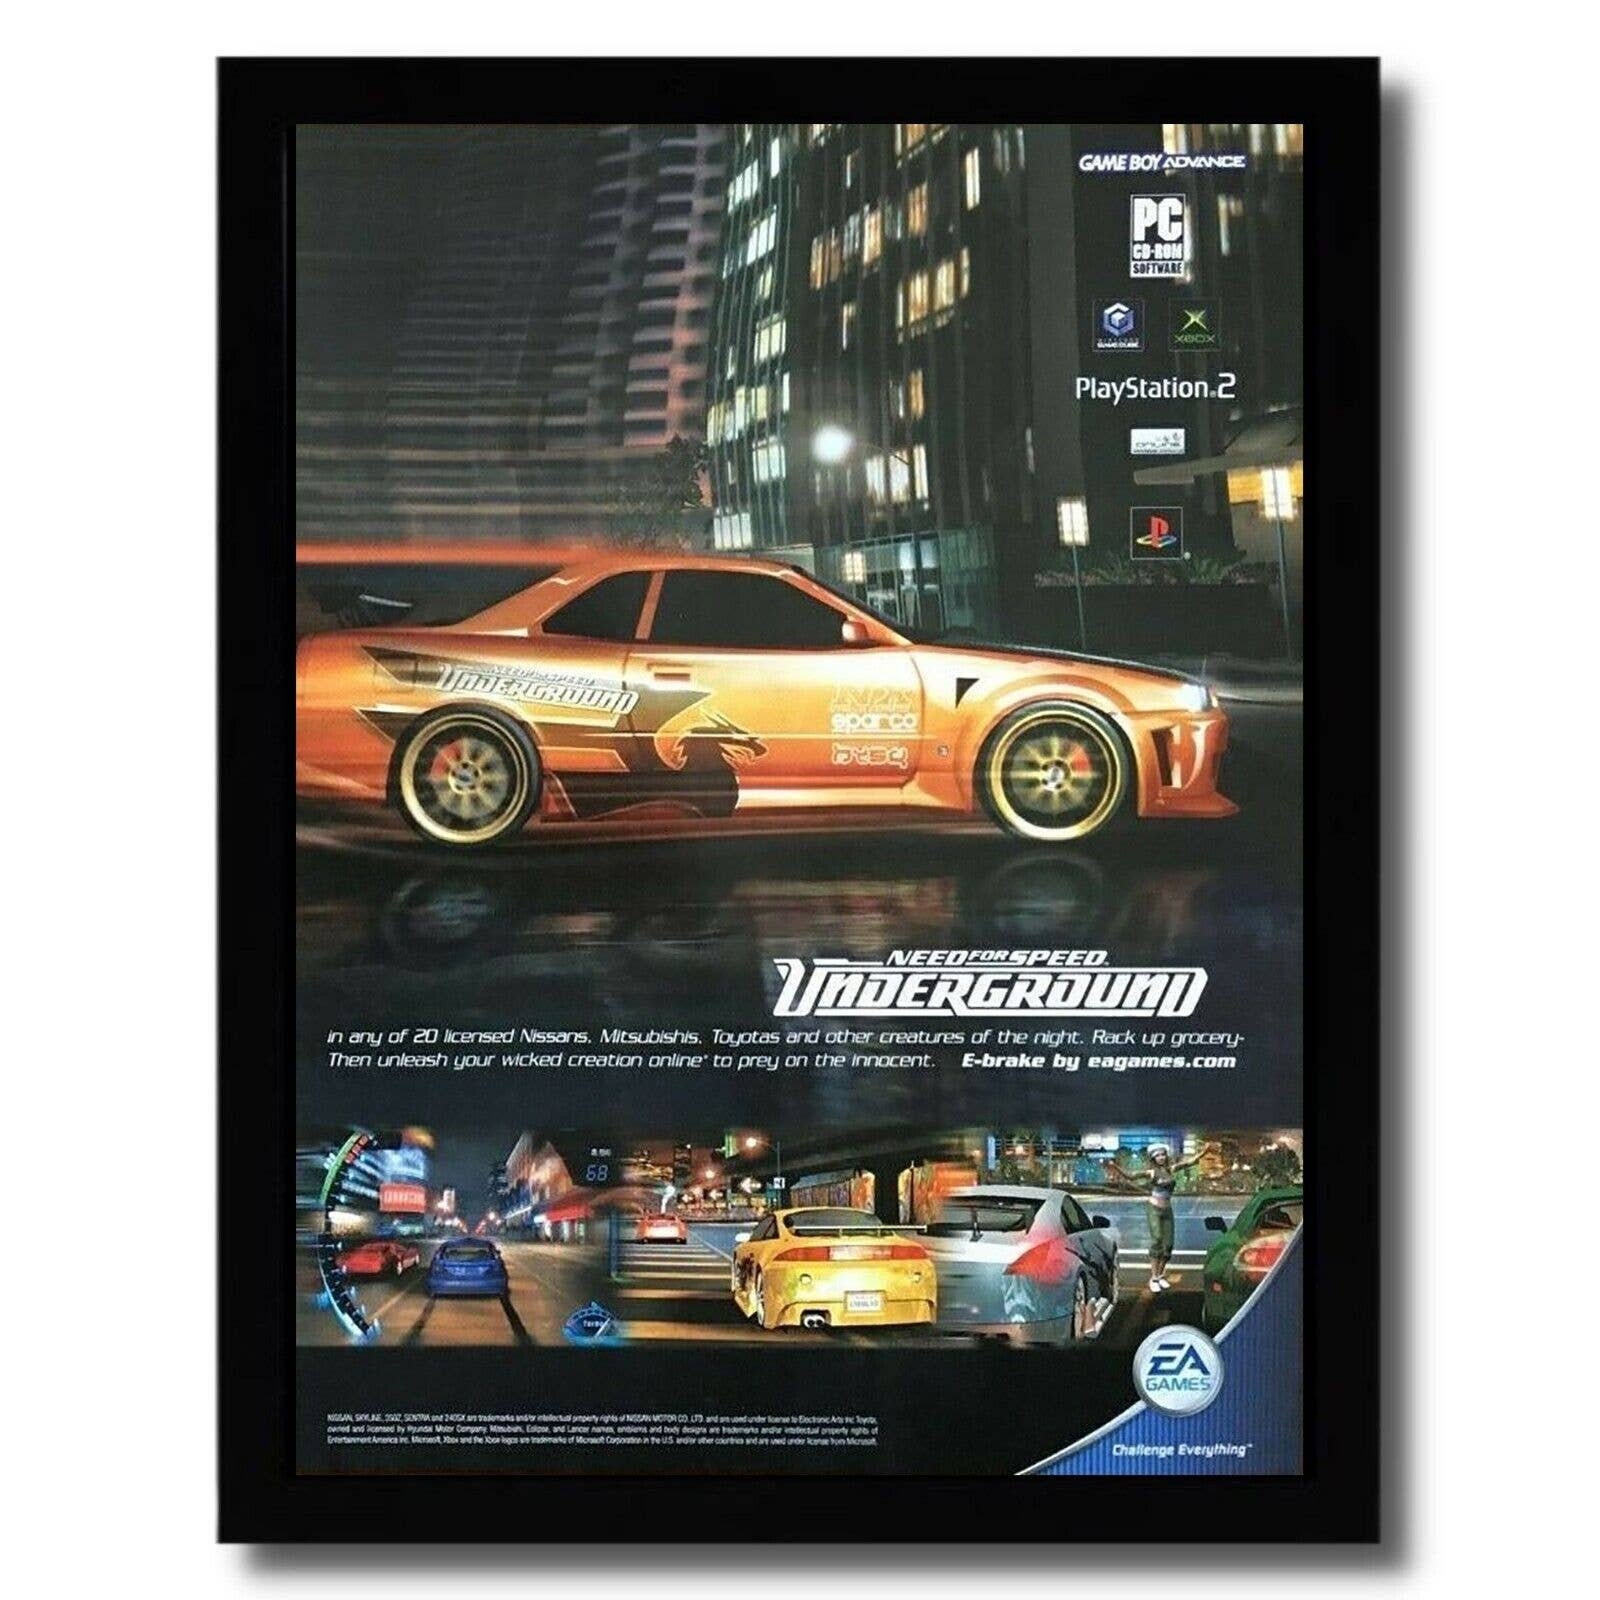 Need for Speed: Underground 2 - GameCube, Game Cube